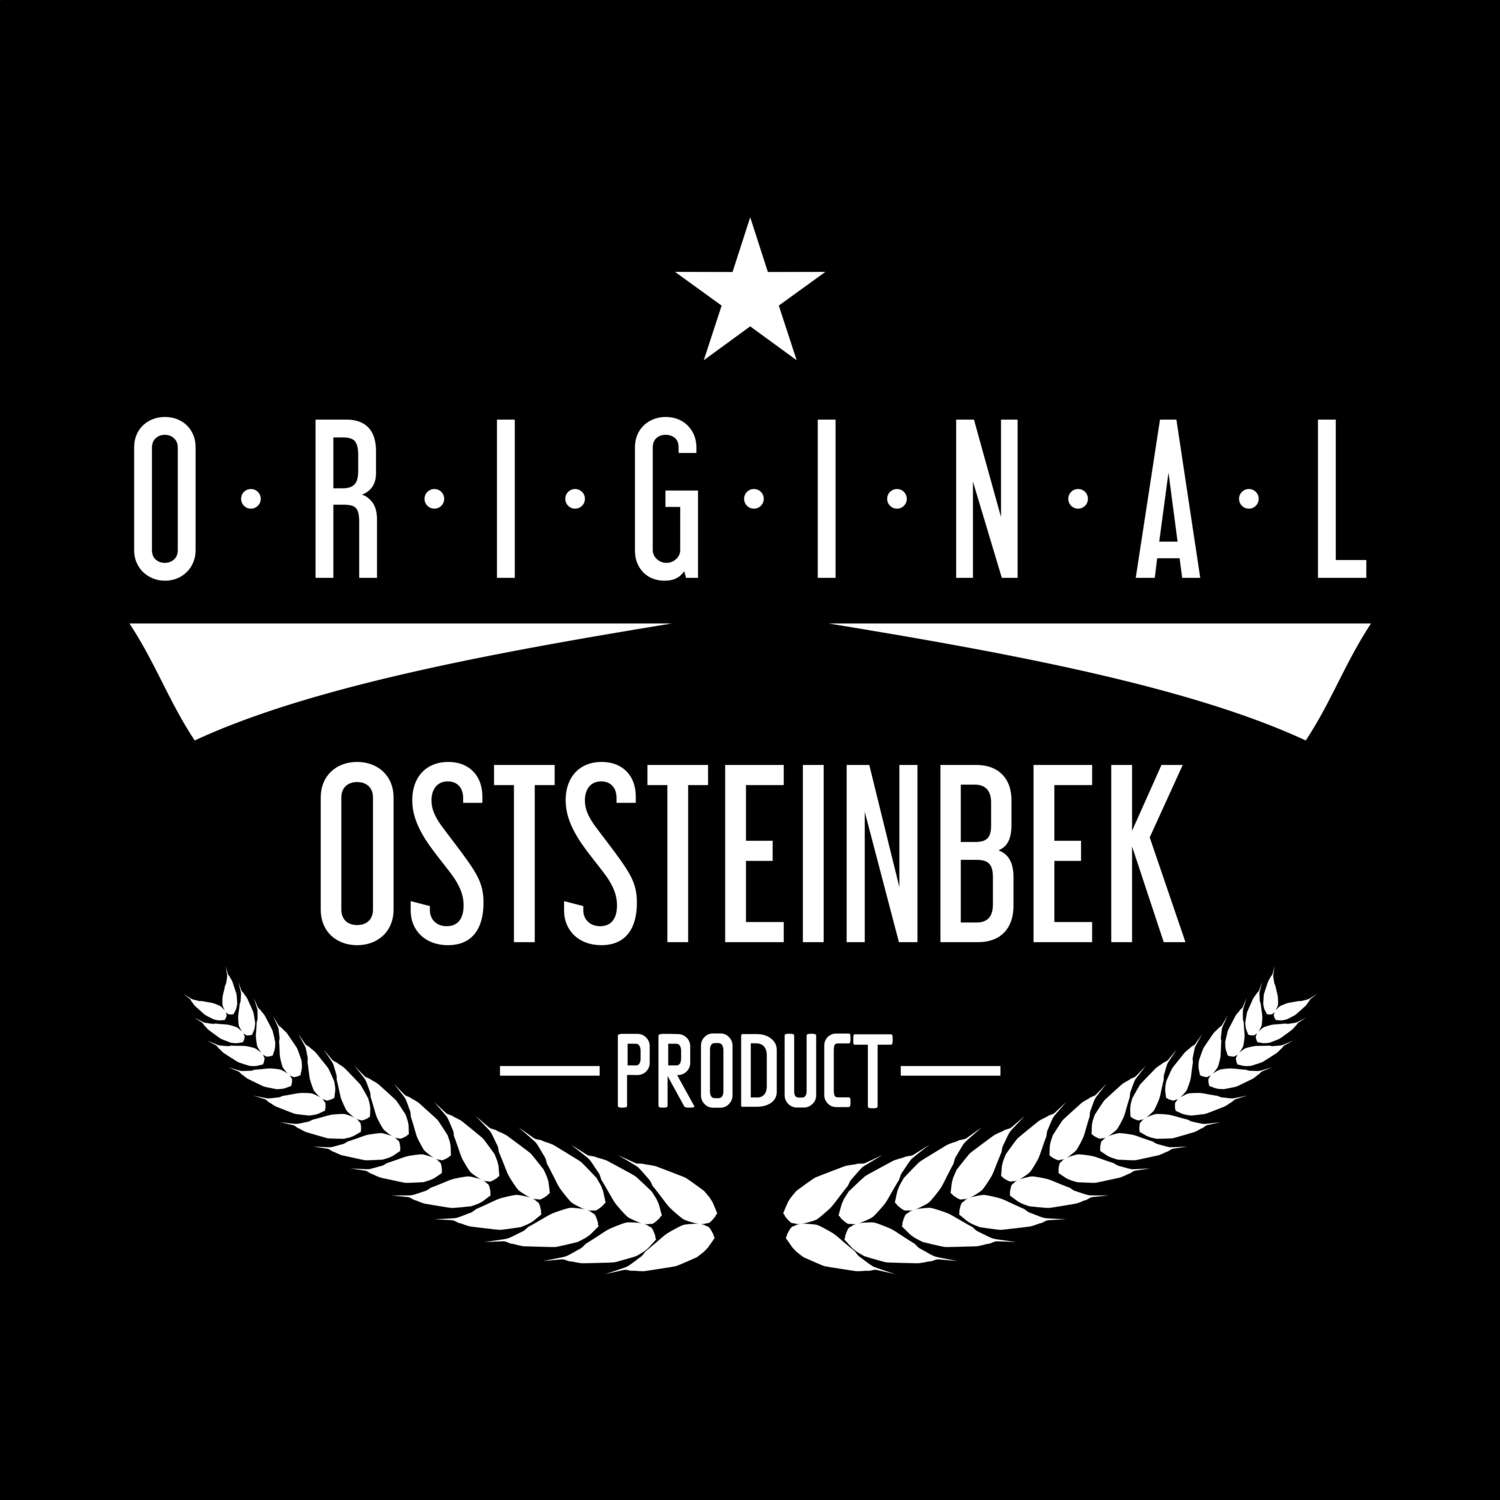 Oststeinbek T-Shirt »Original Product«